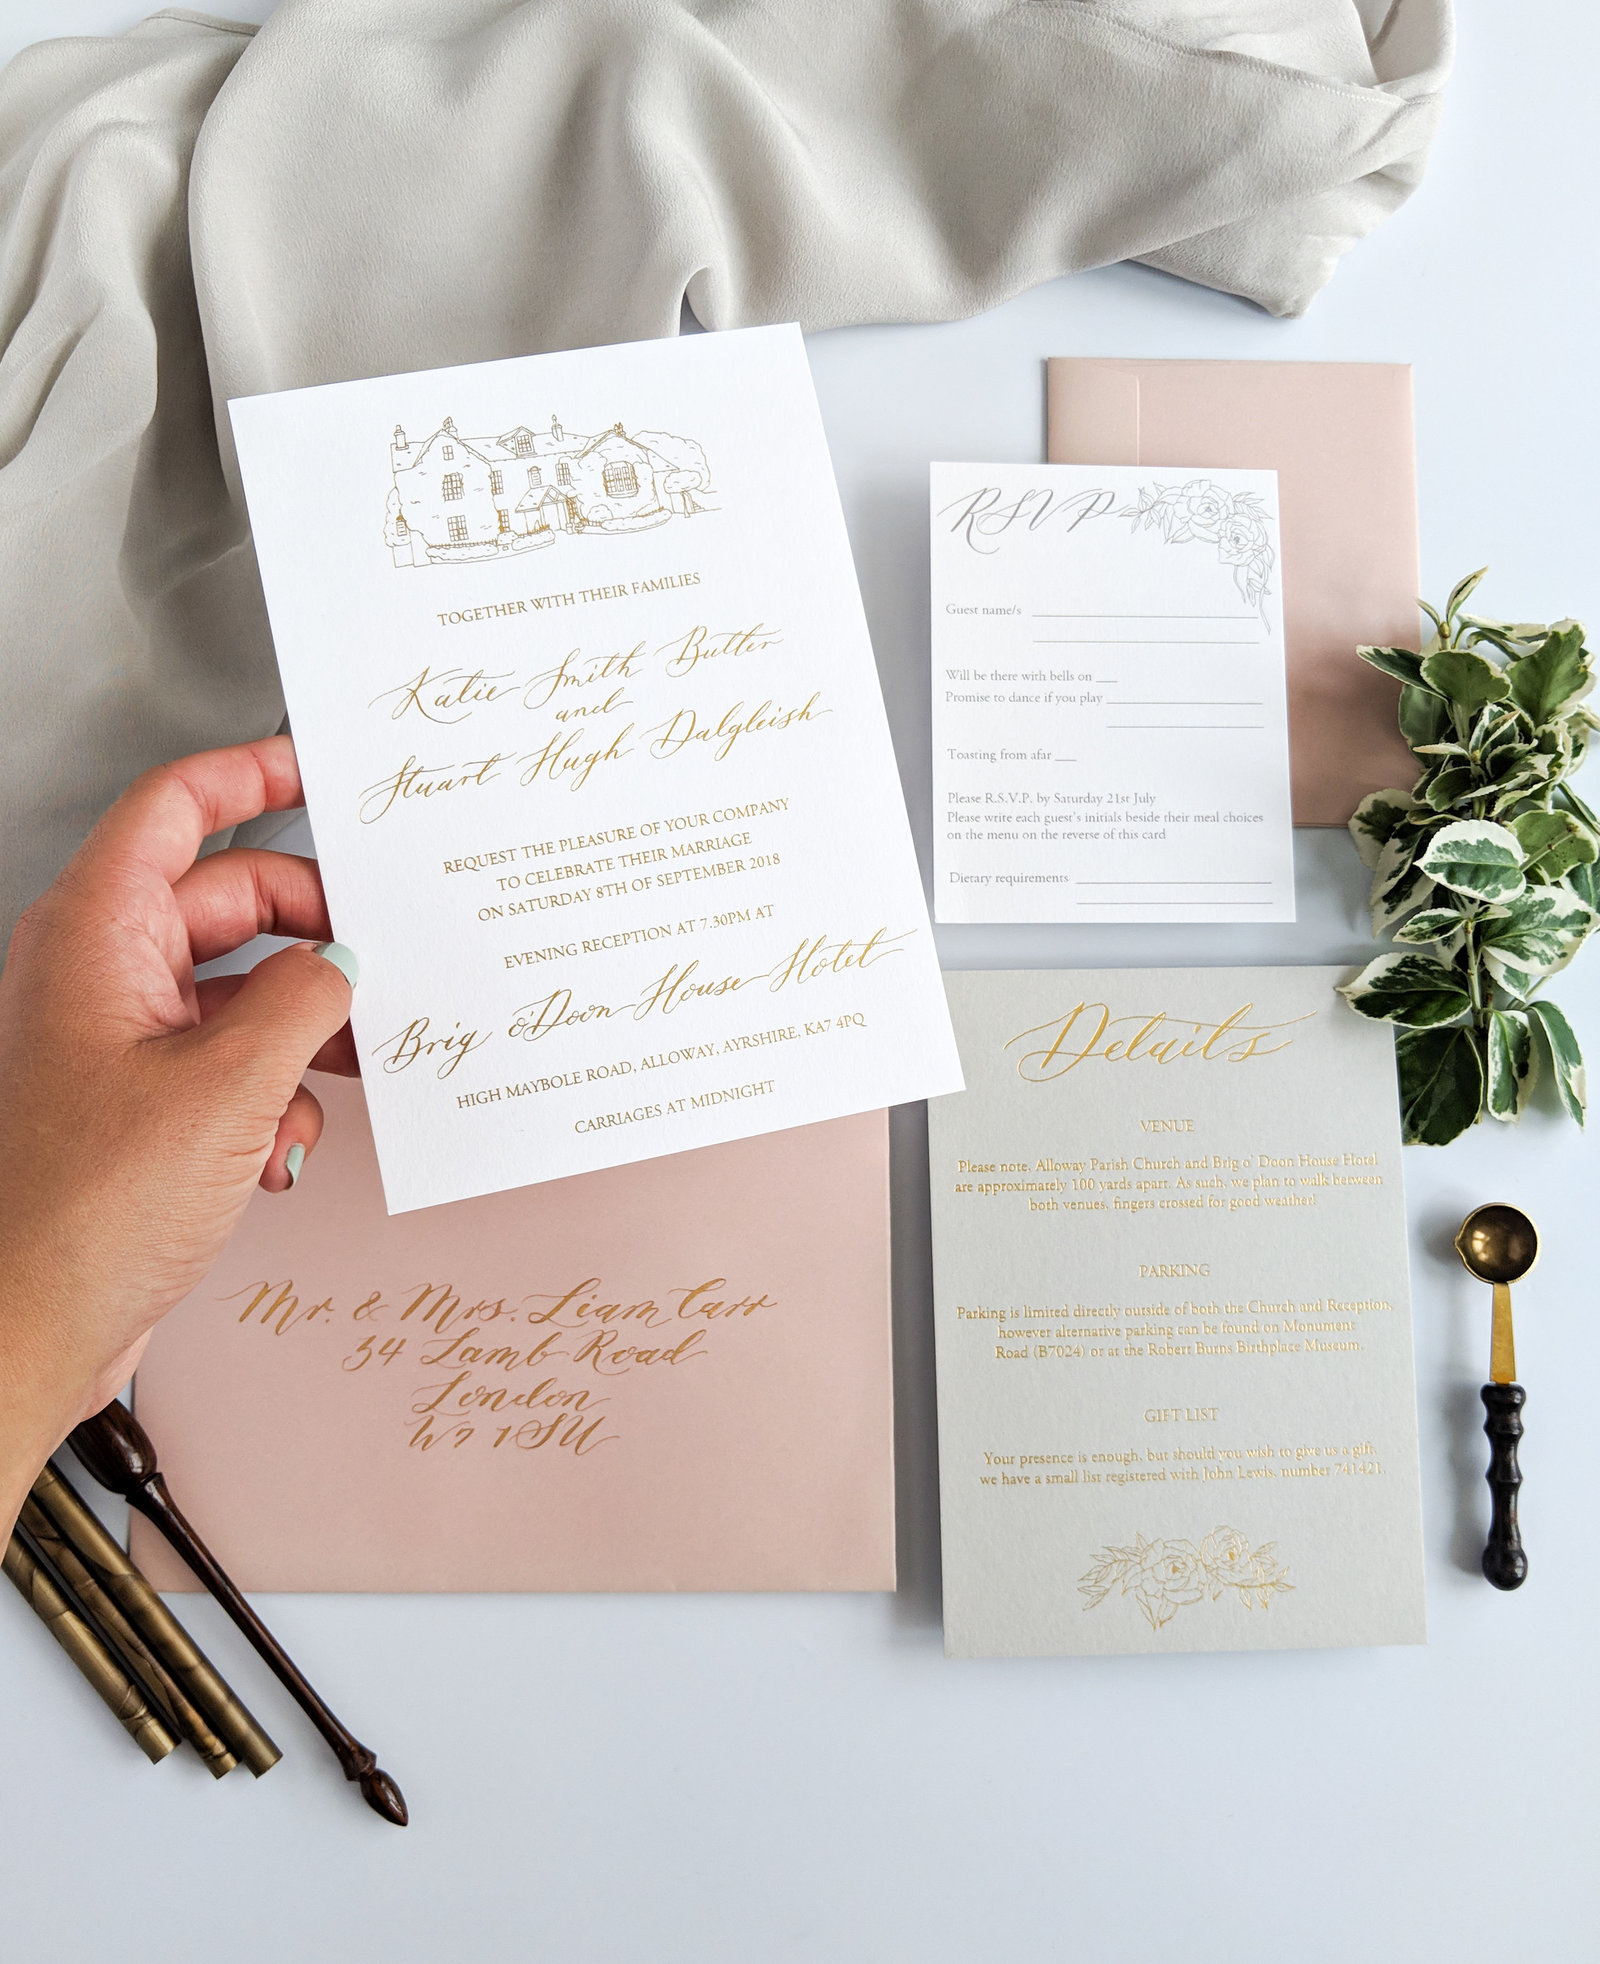 Scottish wedding invitations with gold, grey and blush